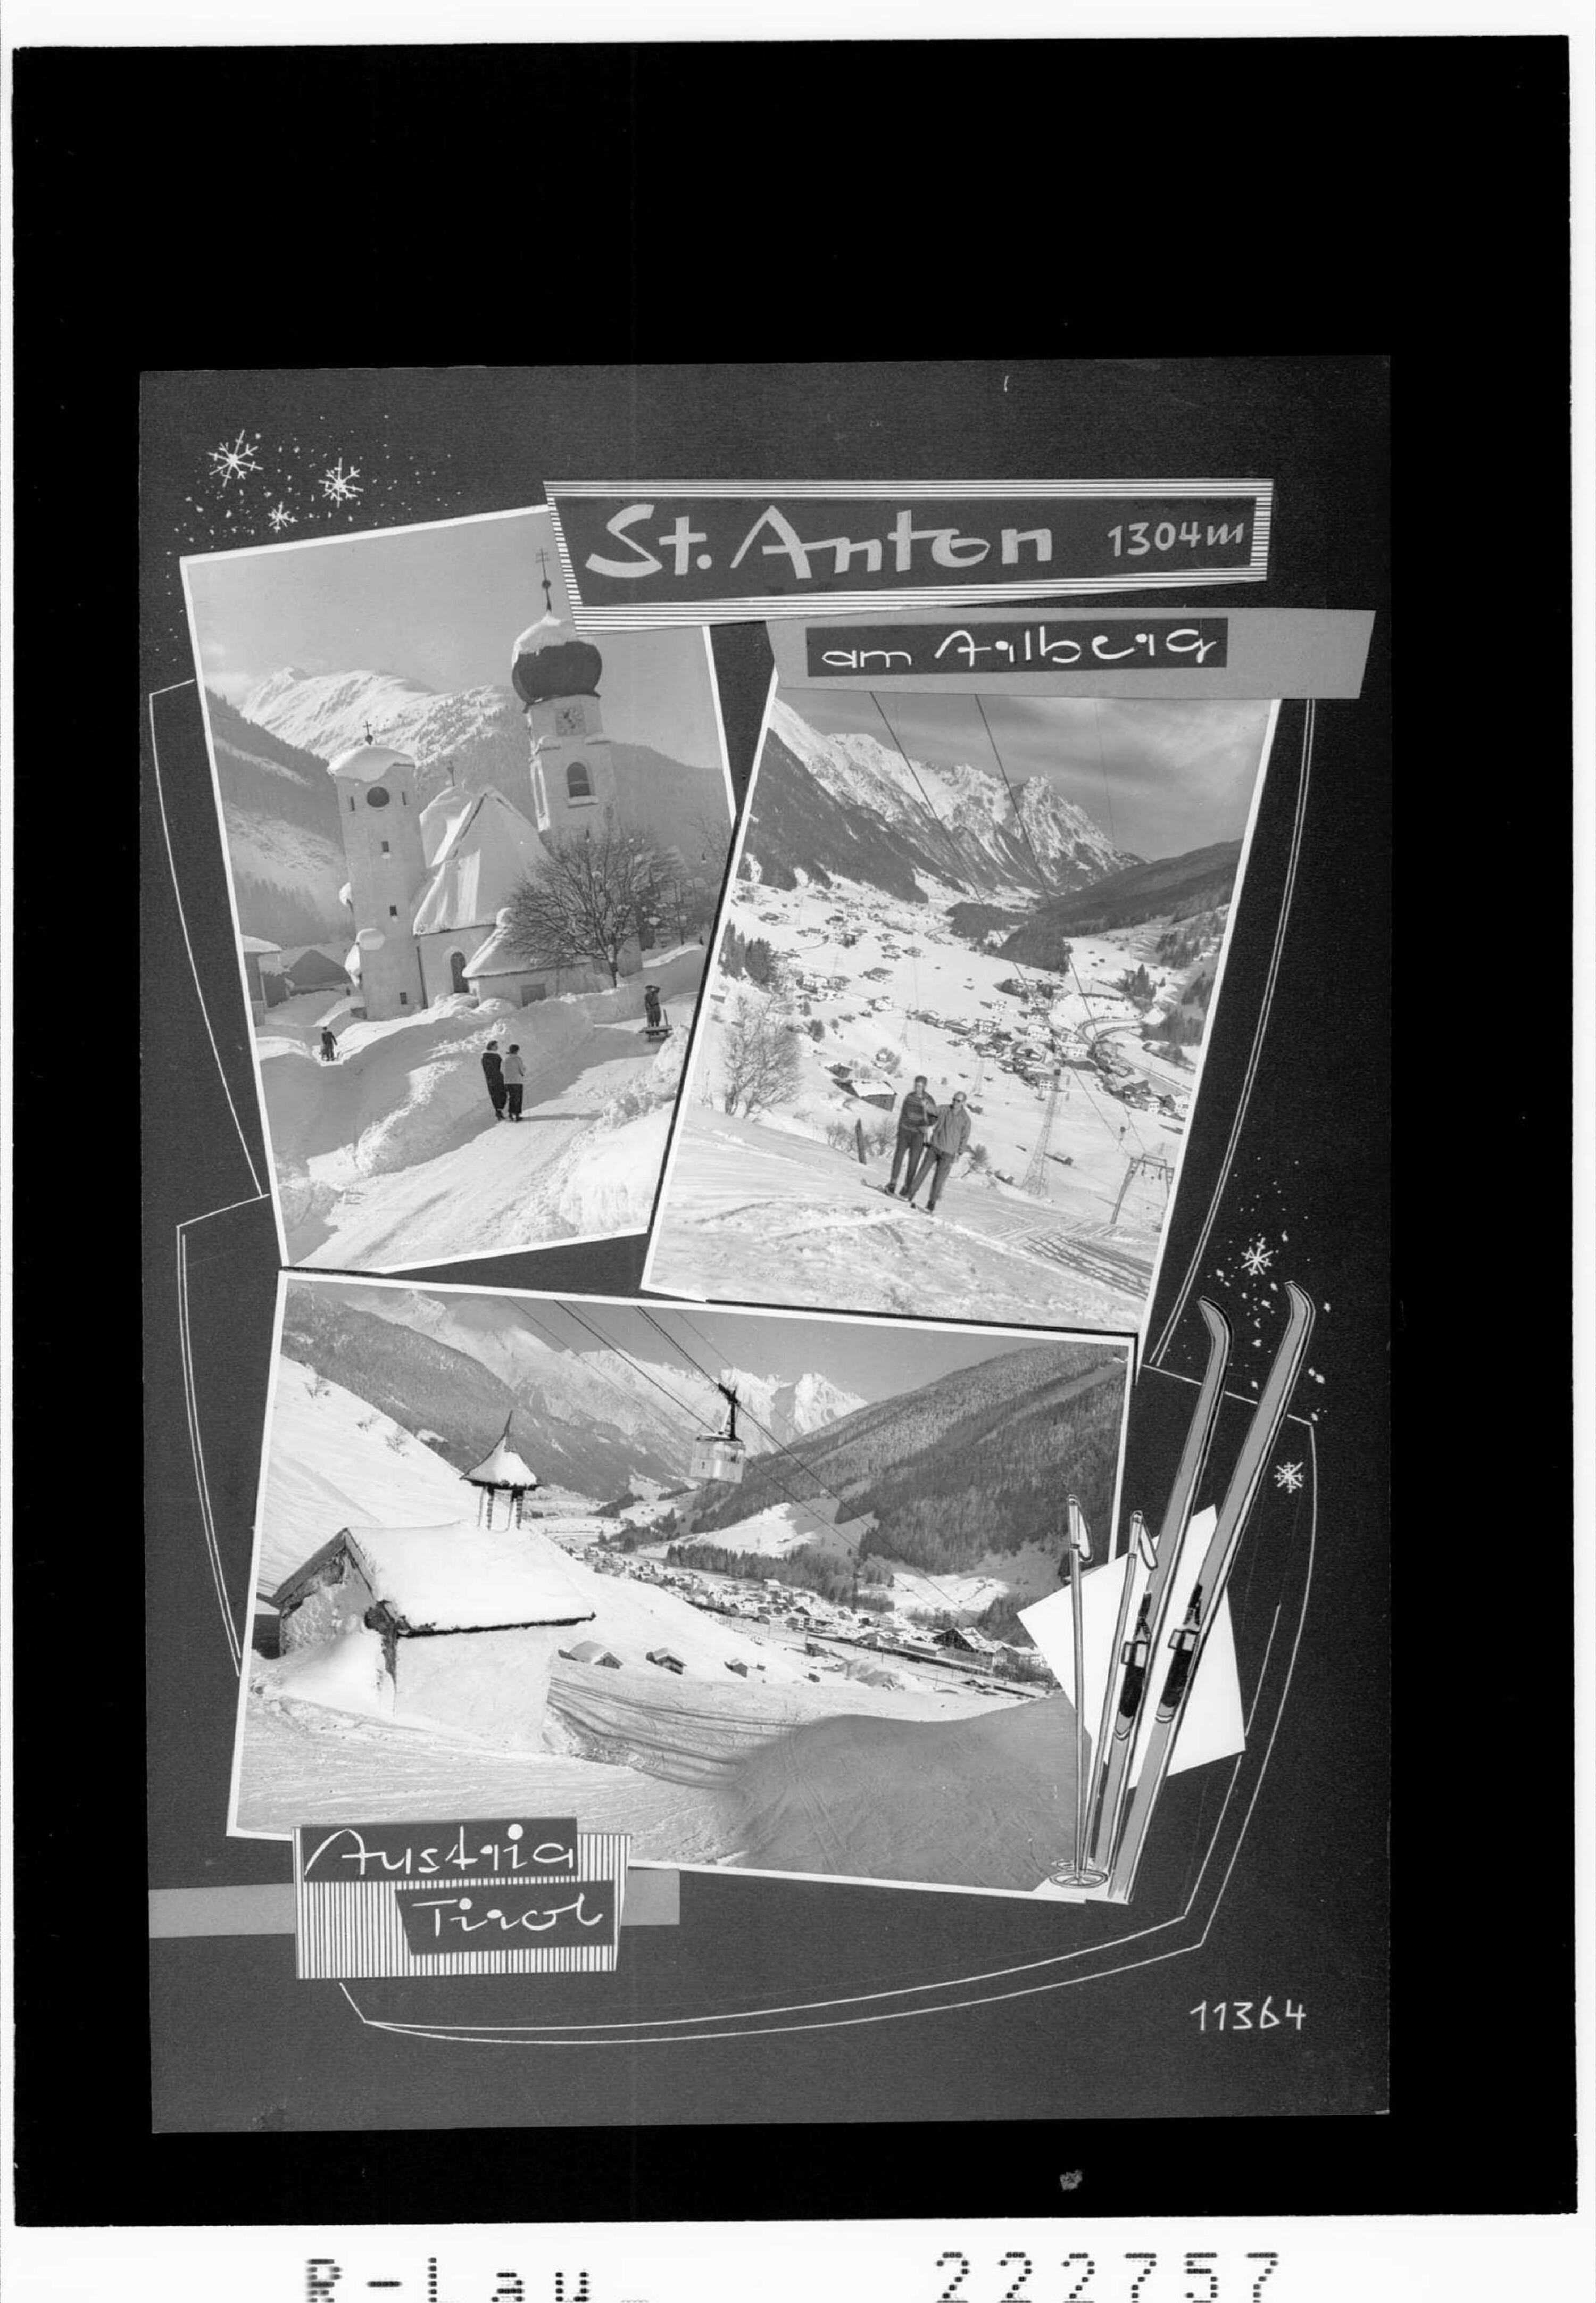 St.Anton am Arlberg 1304 m / Austria / Tirol></div>


    <hr>
    <div class=